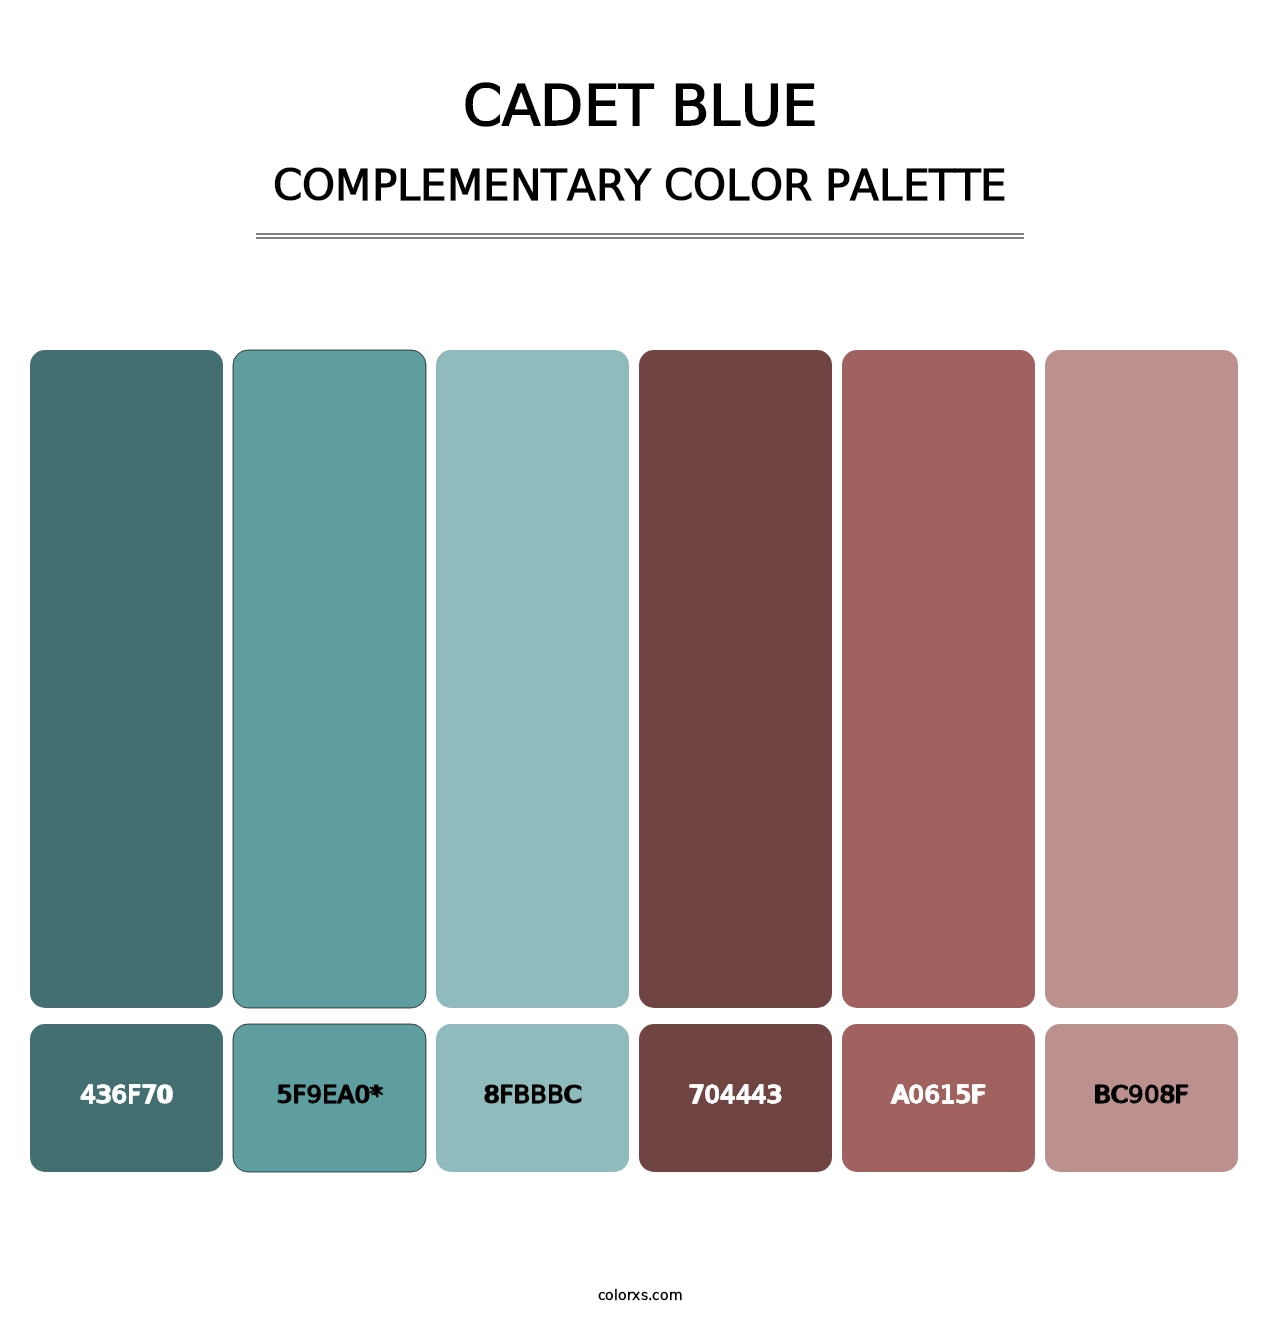 Cadet Blue - Complementary Color Palette